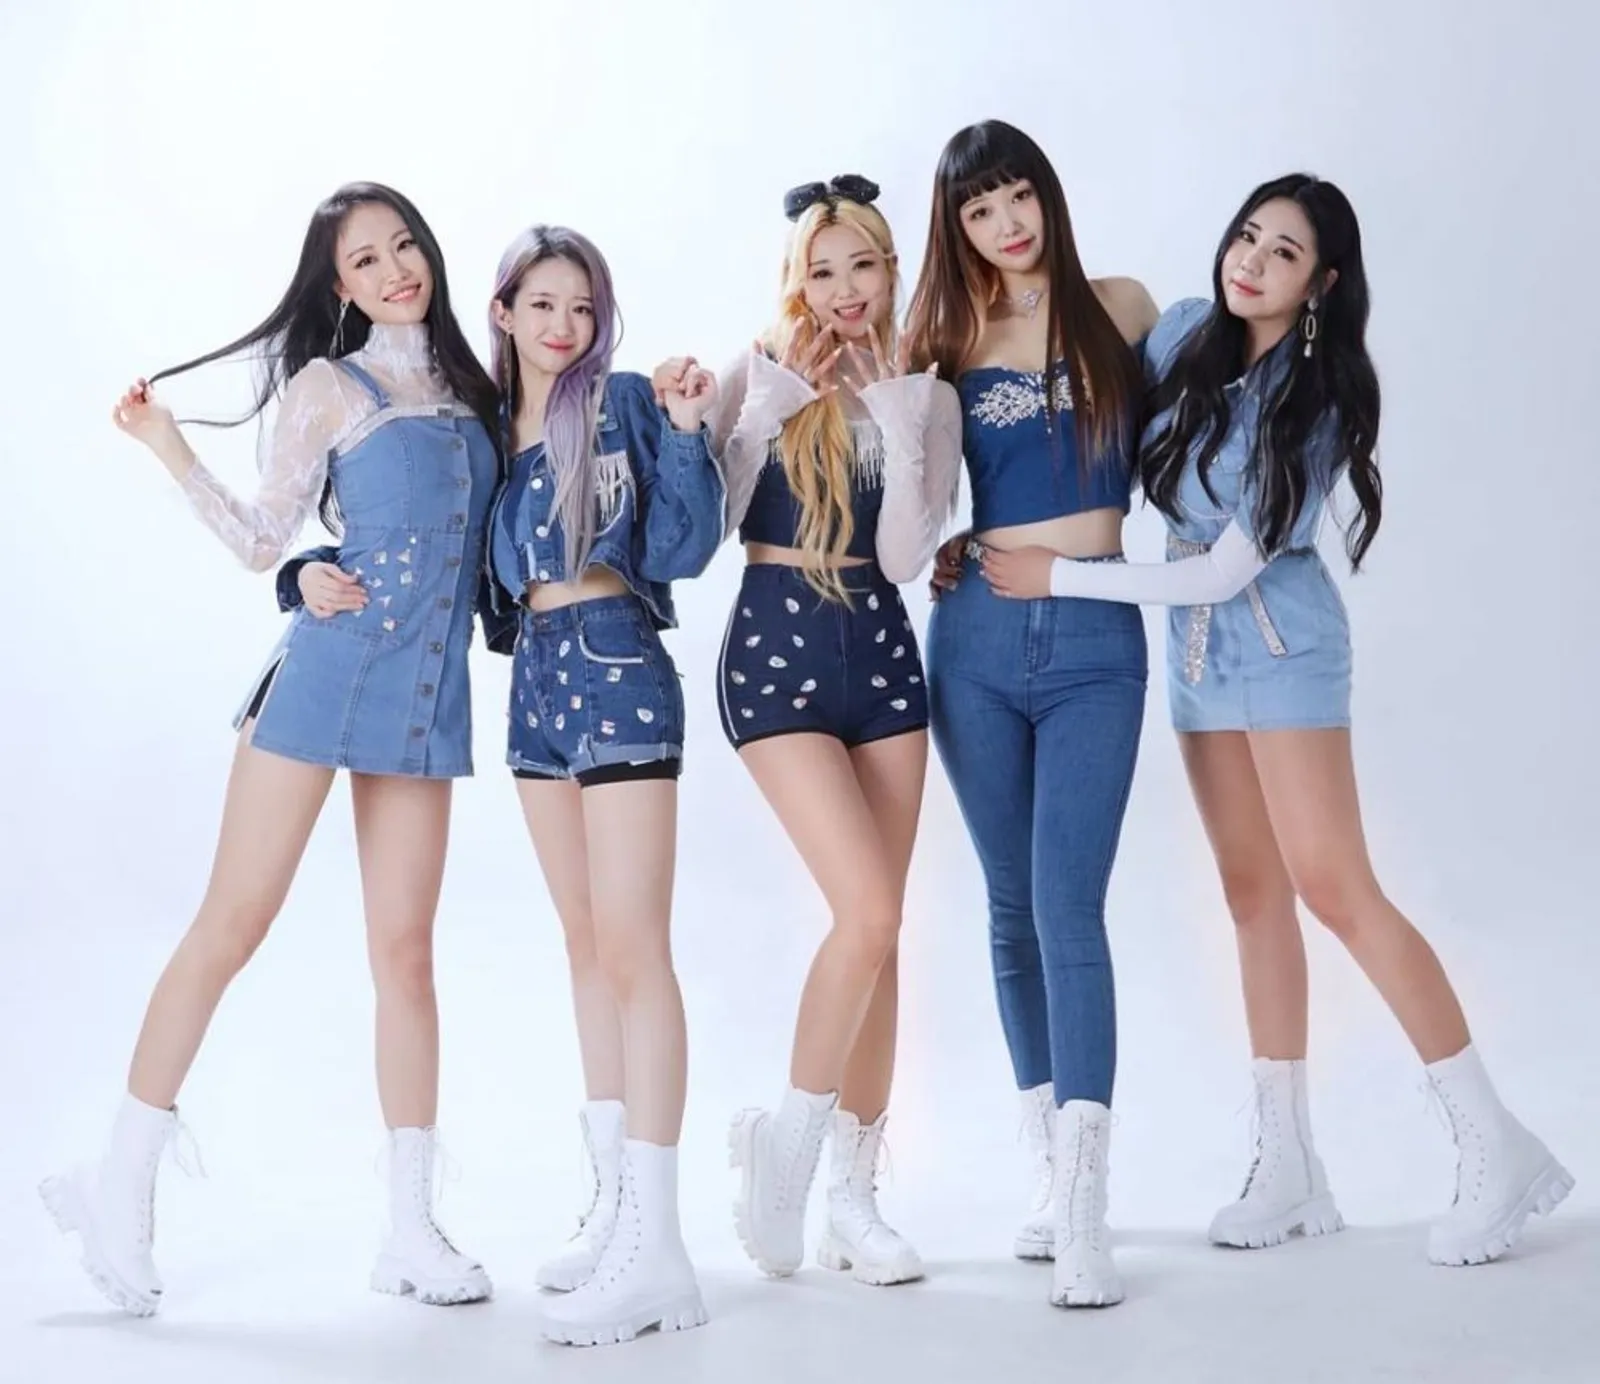 Gaya Kompak Solia, Girlband Korea yang Bubar Setelah 5 Hari Debut